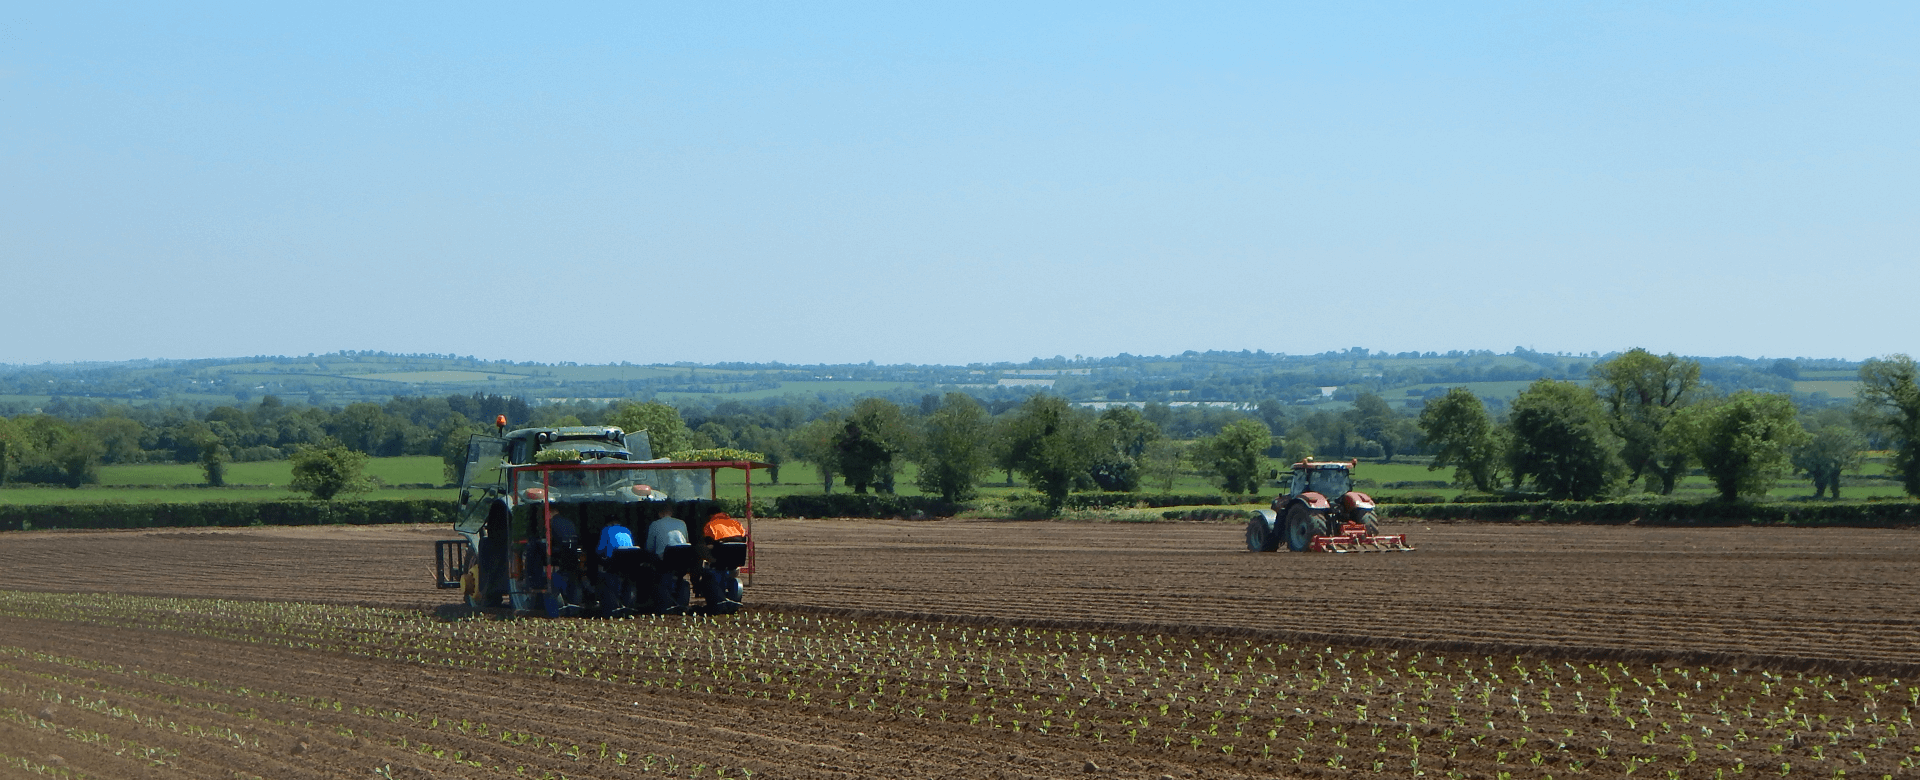 Finnegan's Farm - Planting new potatoes